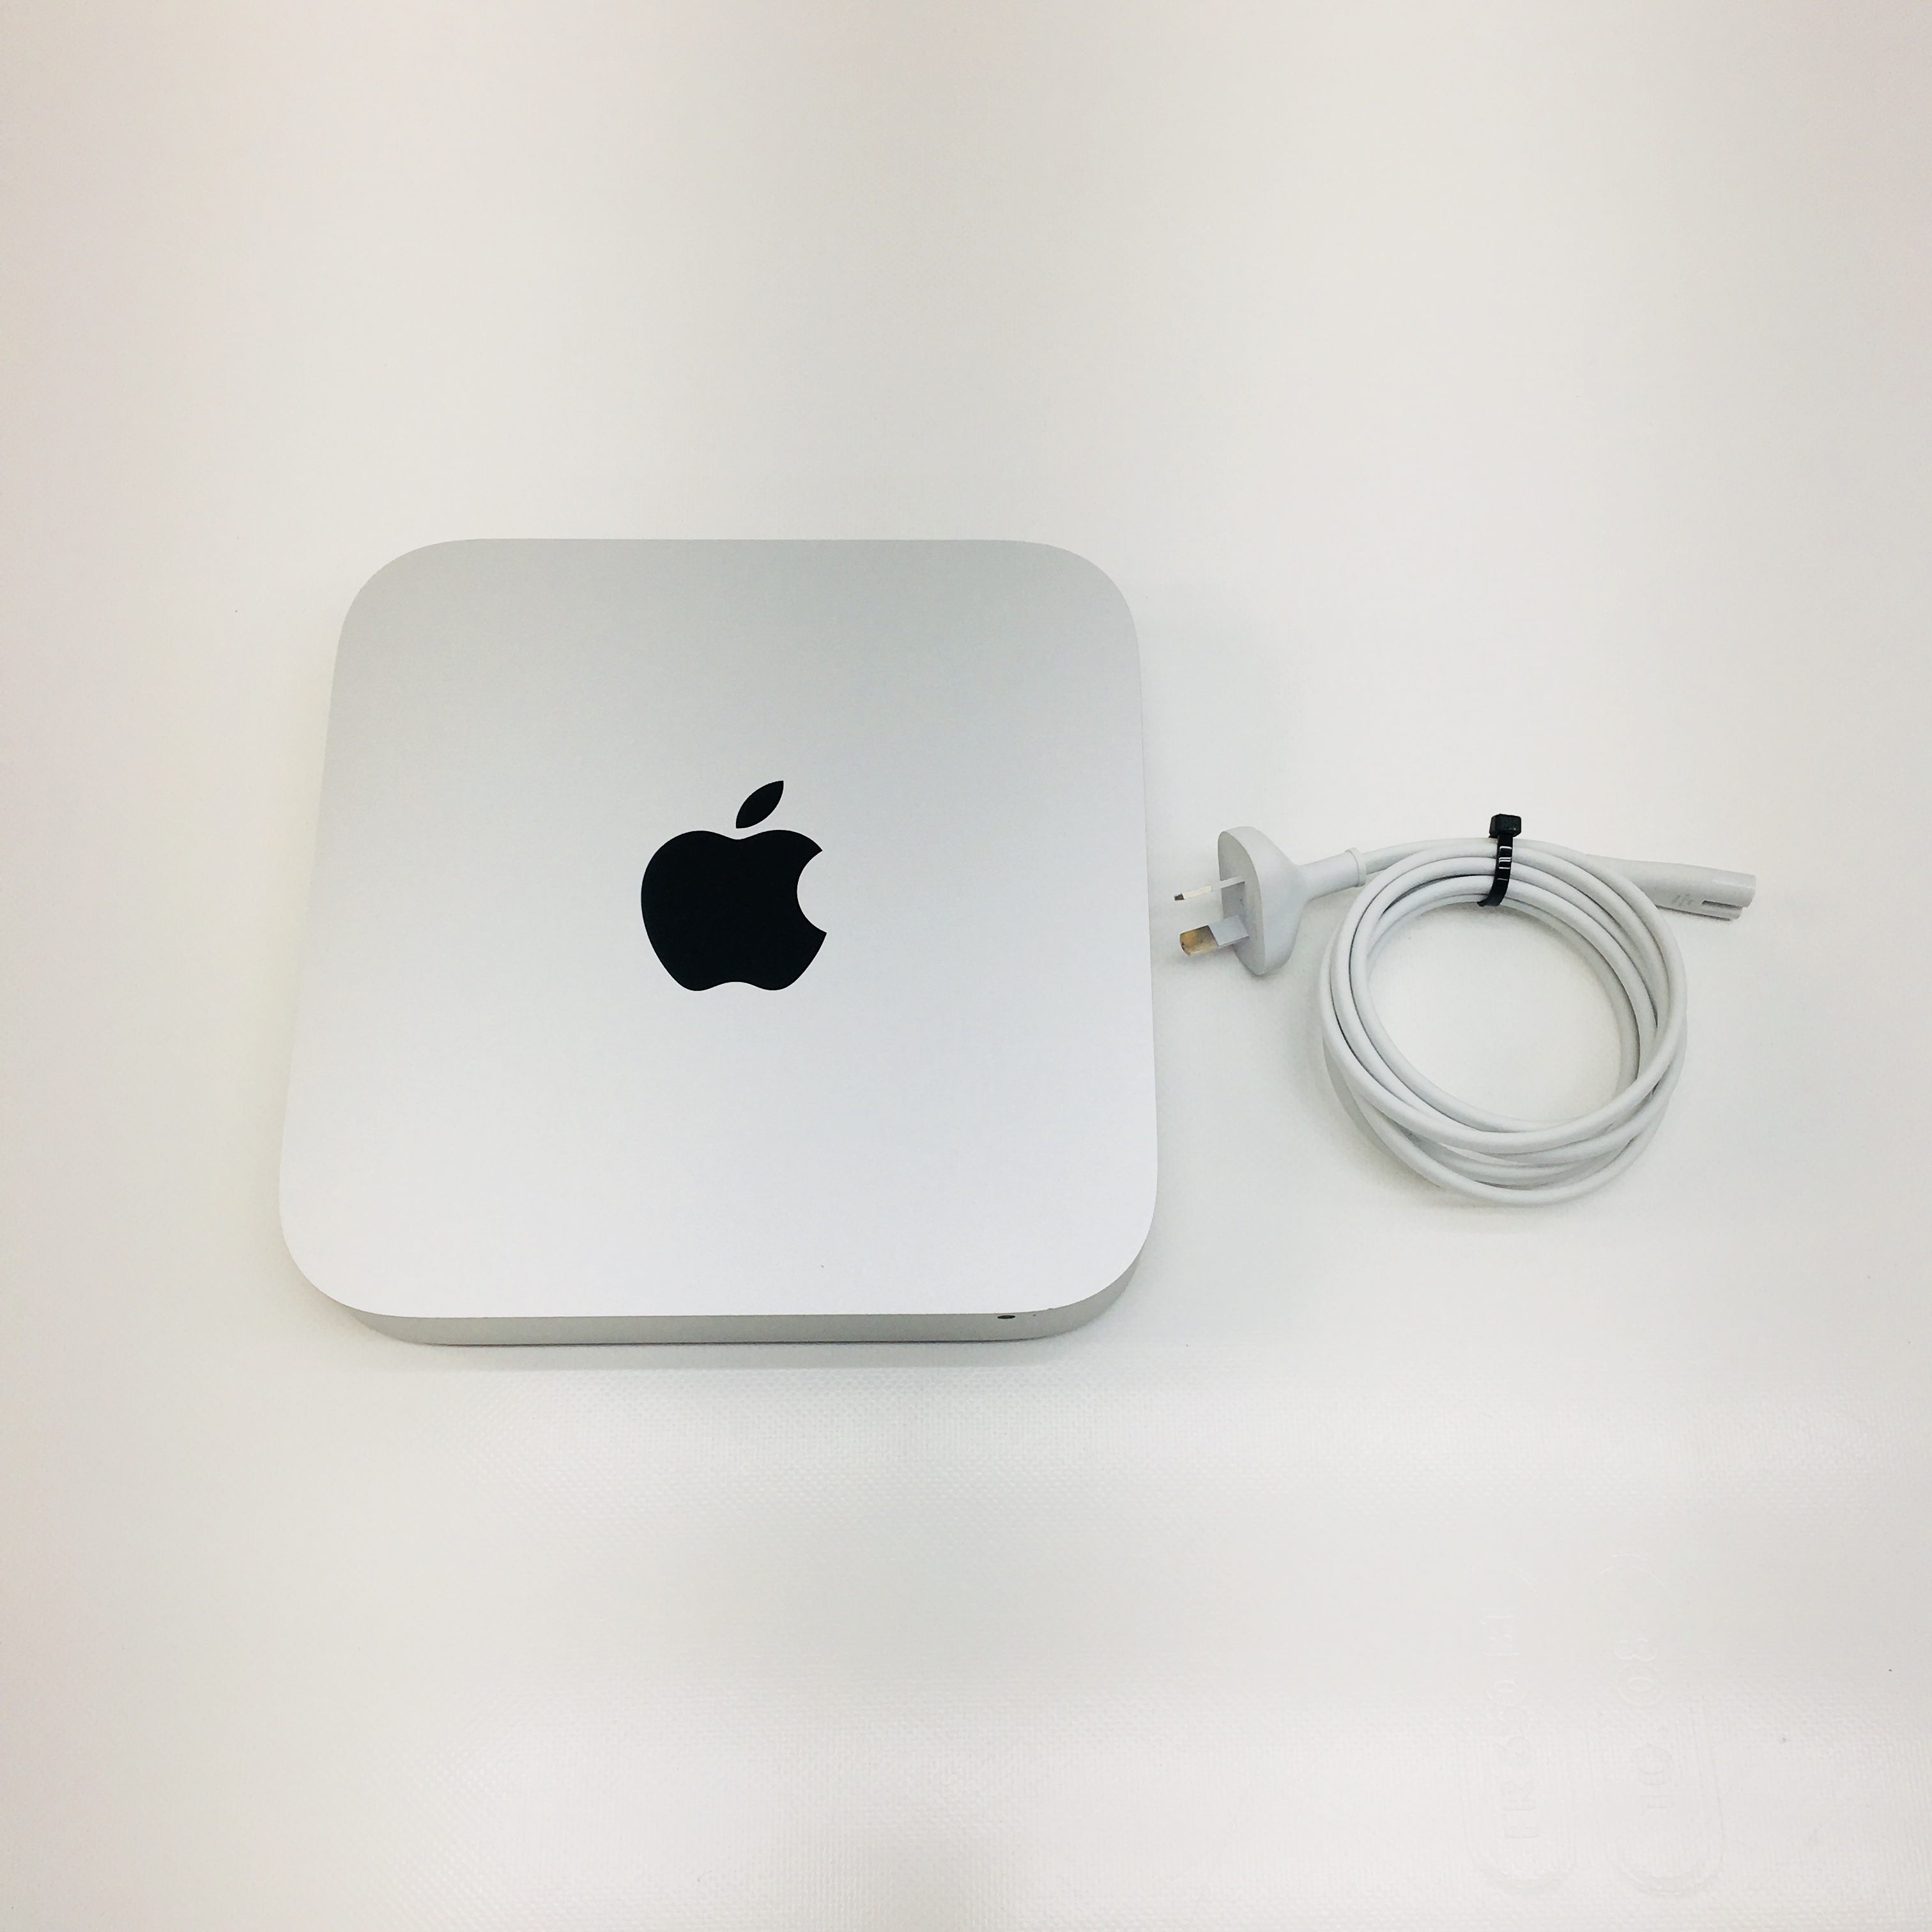 apple mac mini quad core i7 2.6ghz